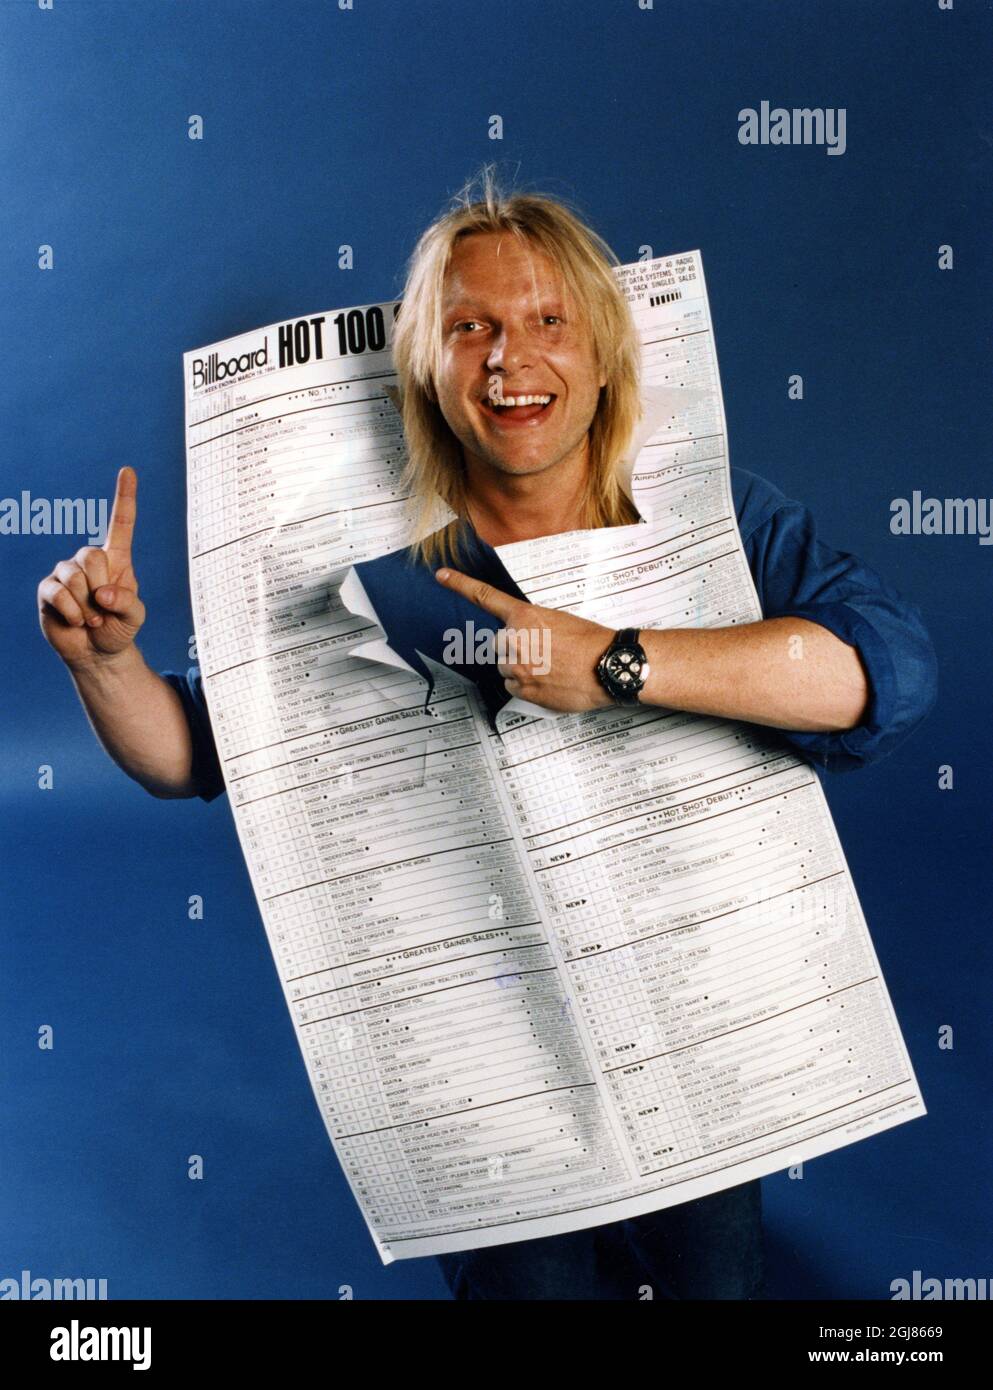 Producer Denniz Pop with the US biollboard list of the 100 hottest songs.  25:e mars 1994 i Stockholm. Foto: Marina Huber / XP / SCANPIX / Kod: 169  Stock Photo - Alamy